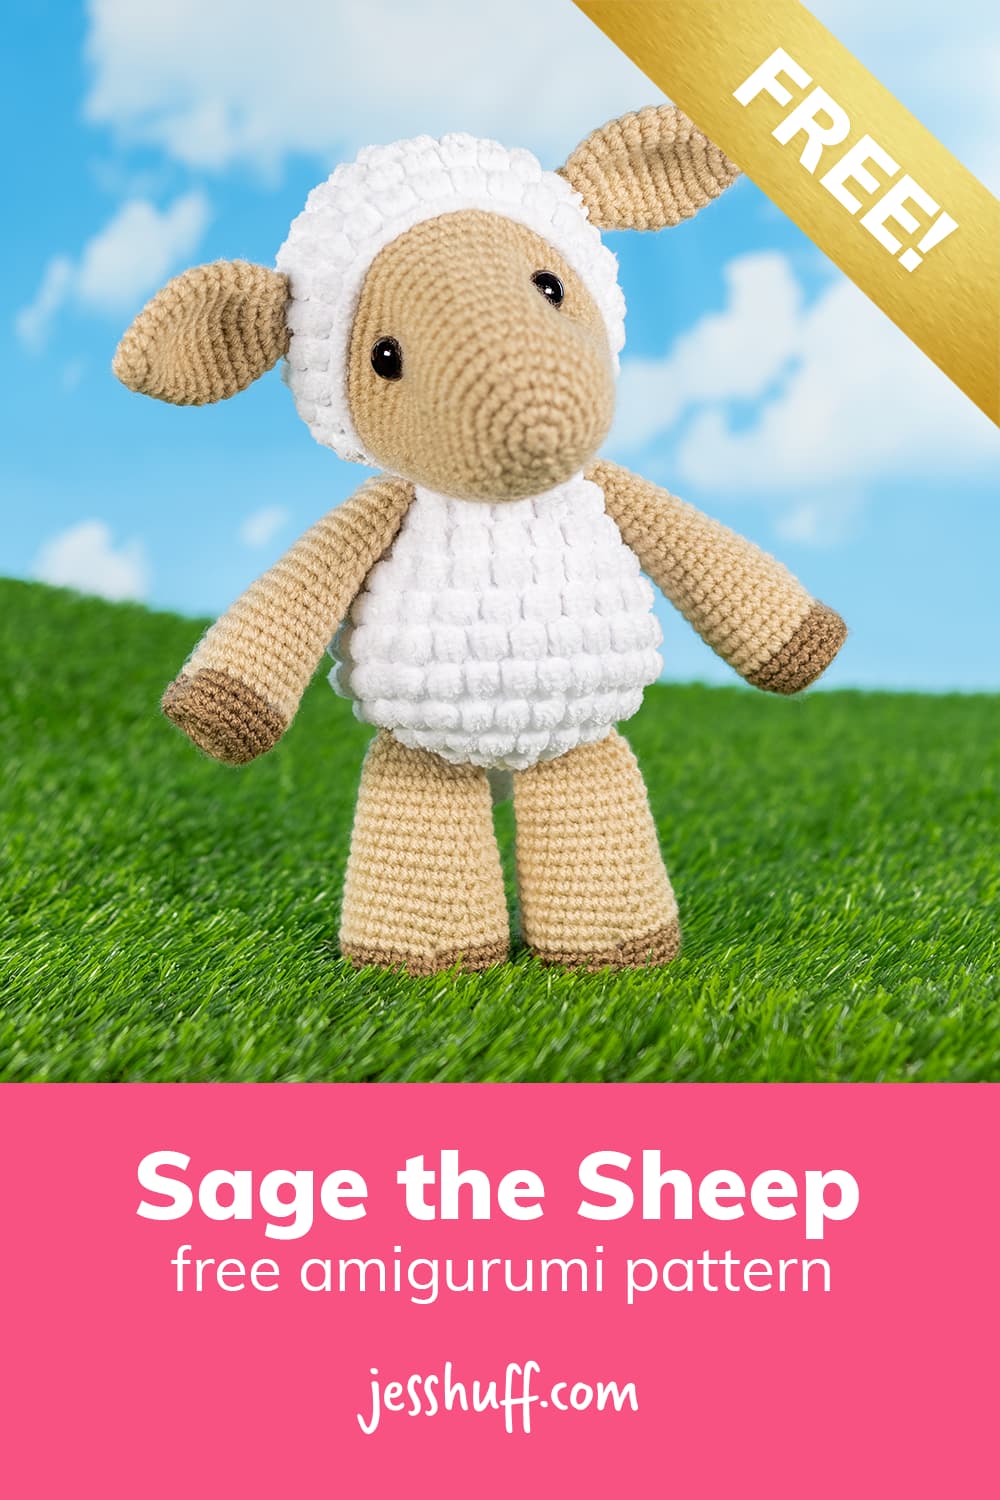 Sheep amigurumi pattern – how cute is this?? I can't believe it's free! via @heyjesshuff